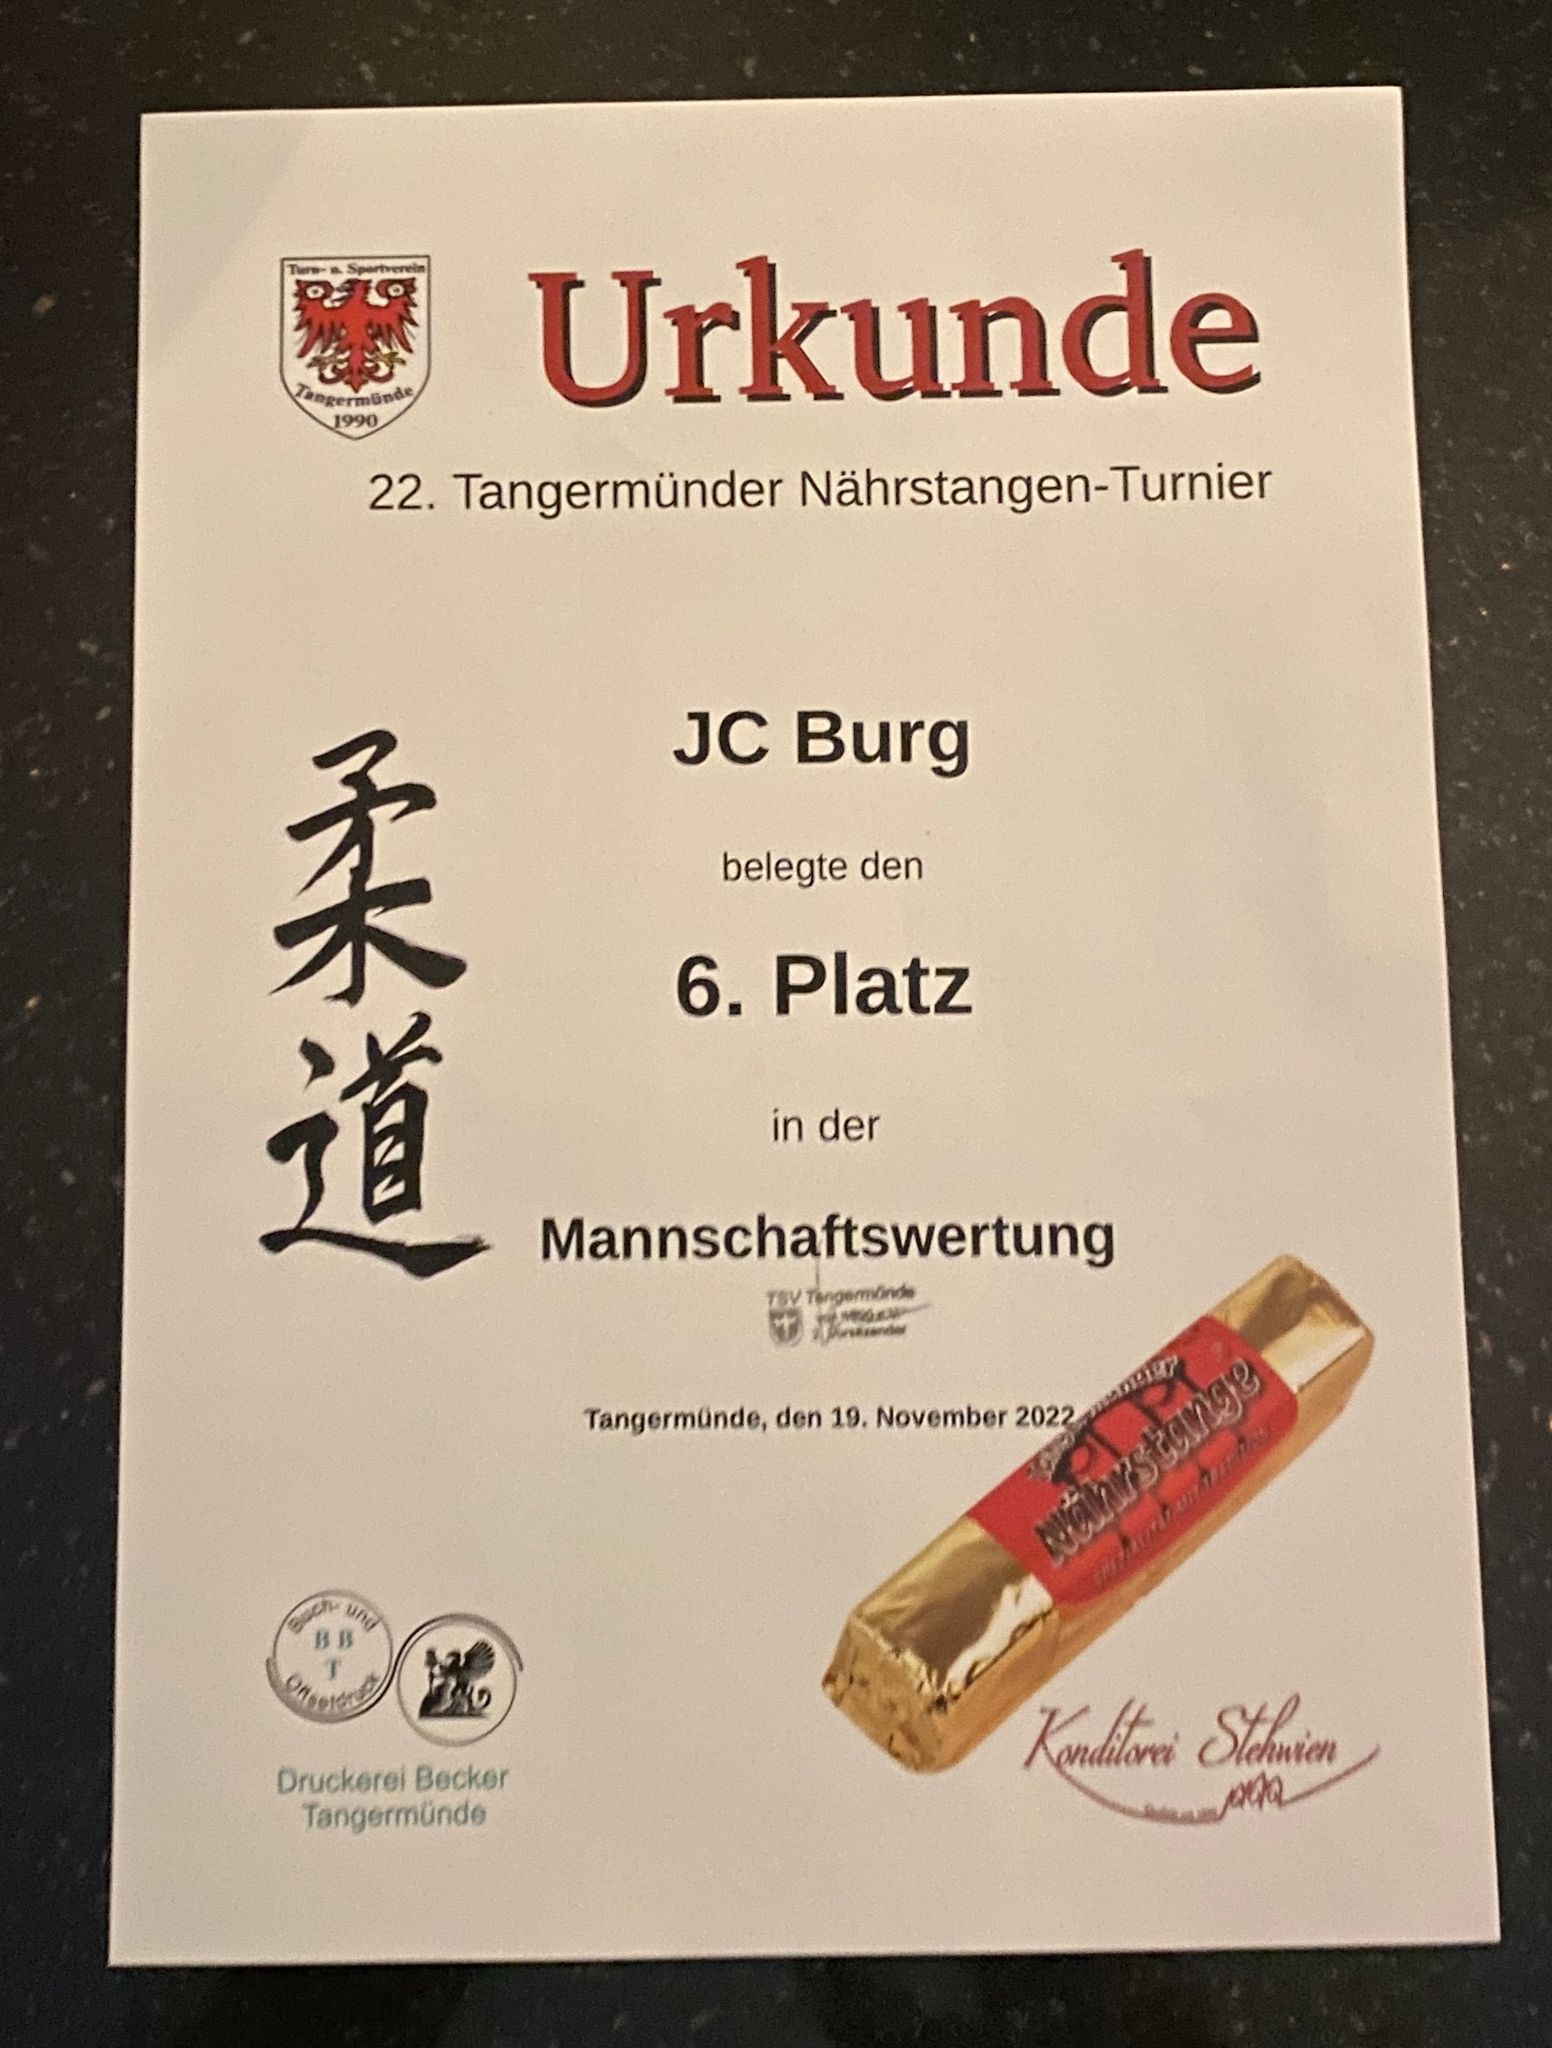 You are currently viewing 22. Tangermünder Nährstangen-Turnier